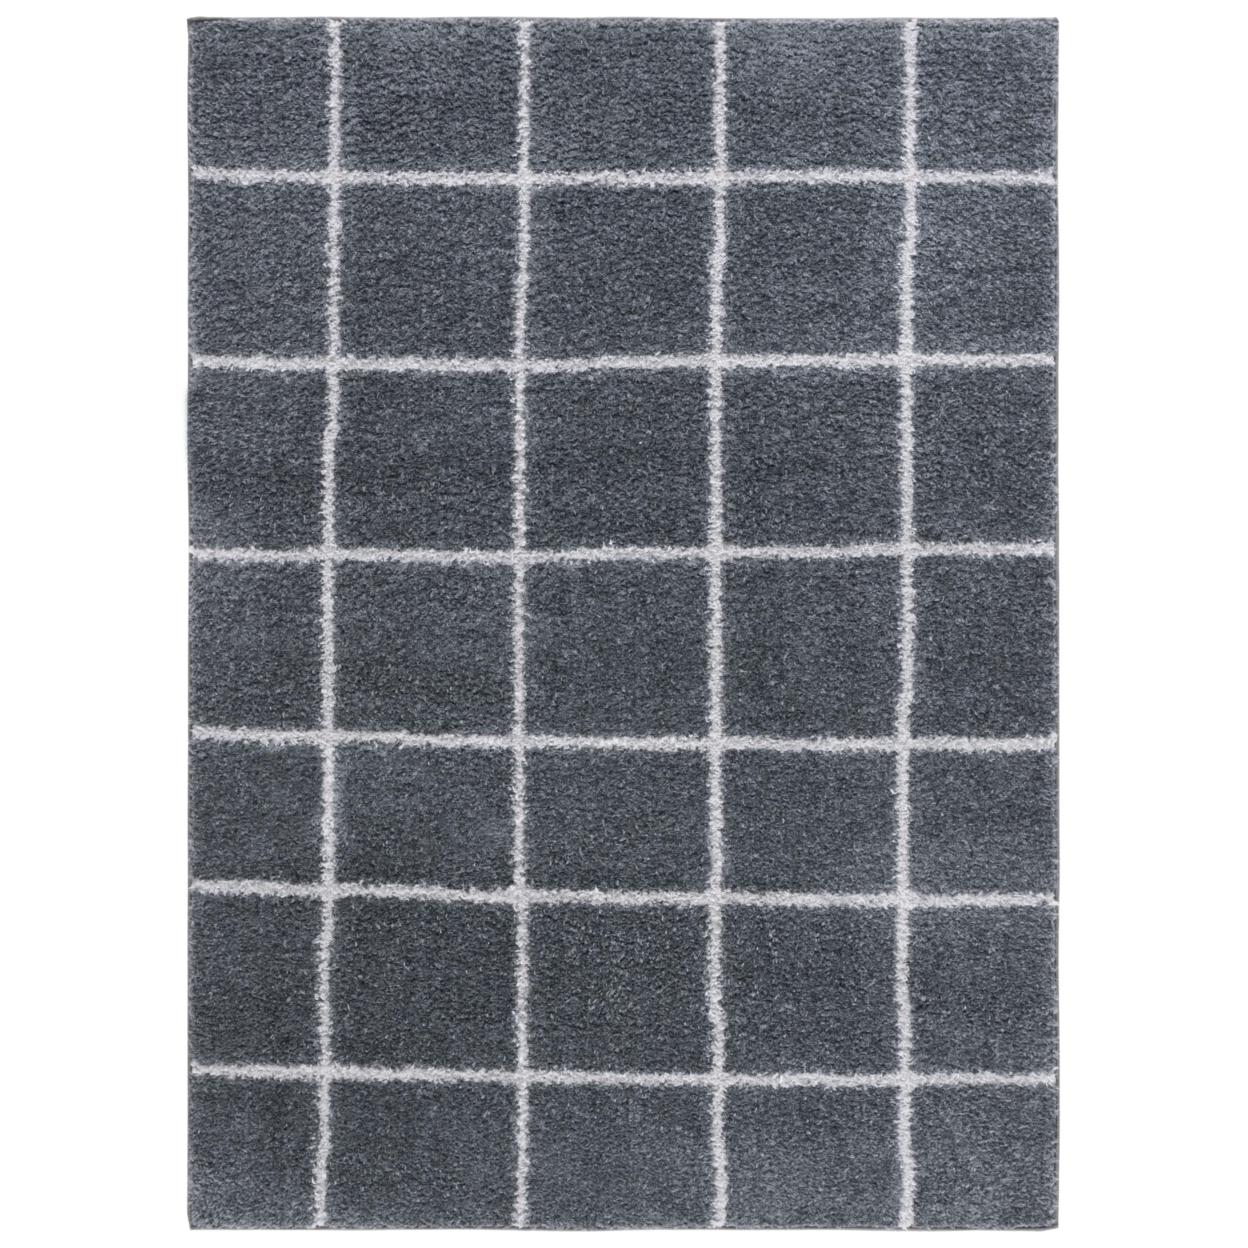 Safavieh NOR206F Norway Dark Grey / Light Grey - Black / Ivory, 9' X 12' Rectangle